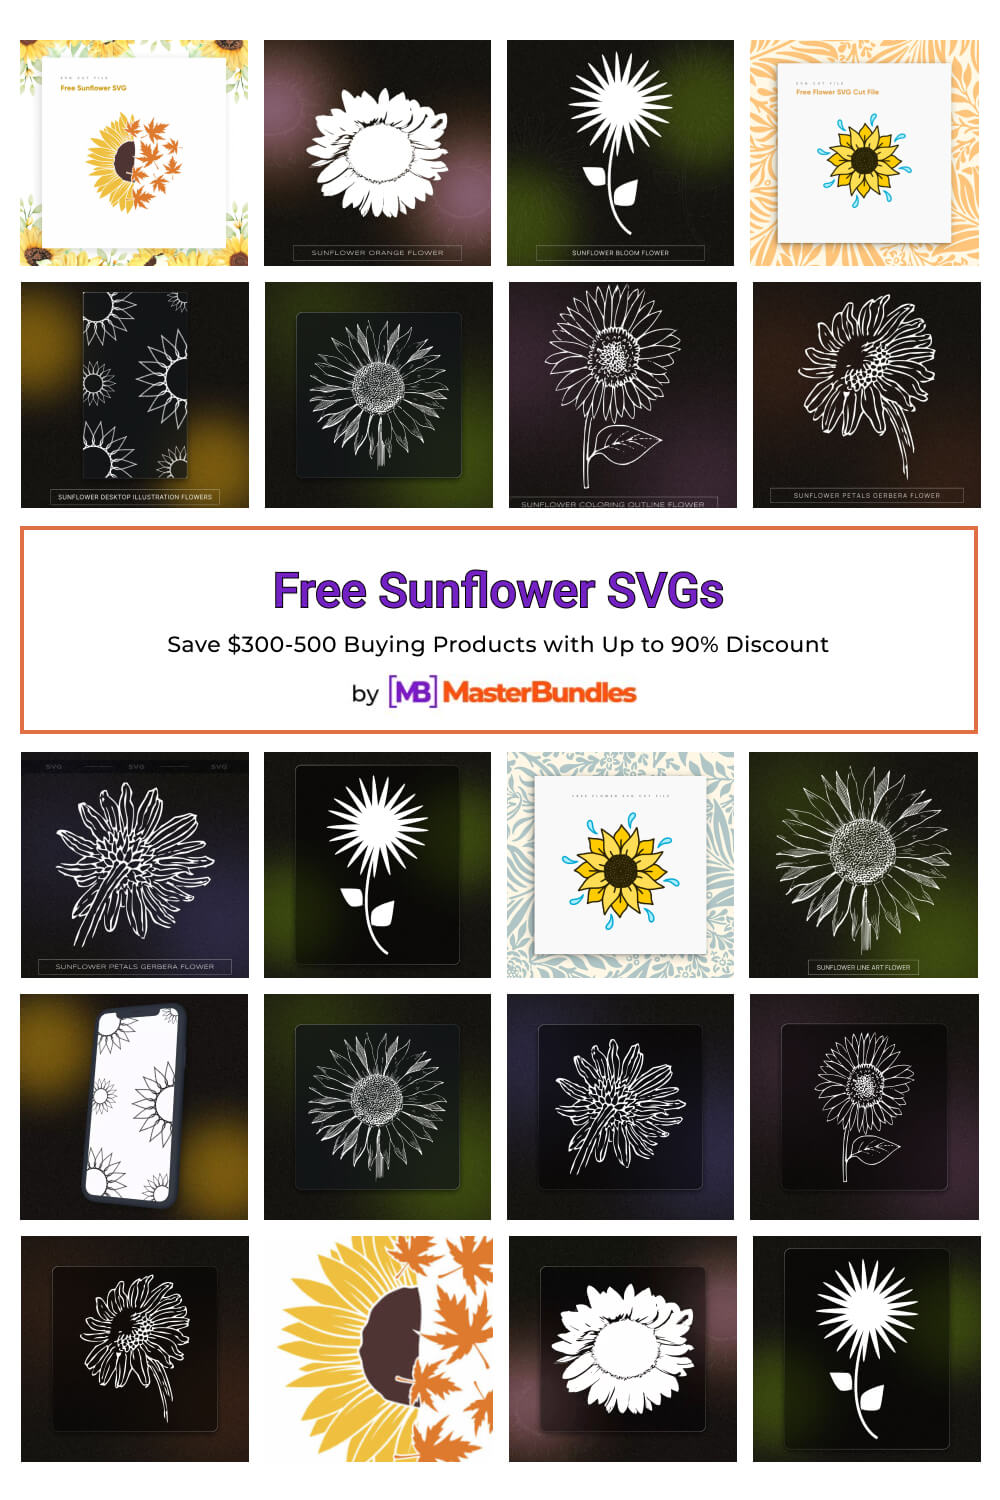 free sunflower svgs pinterest image.